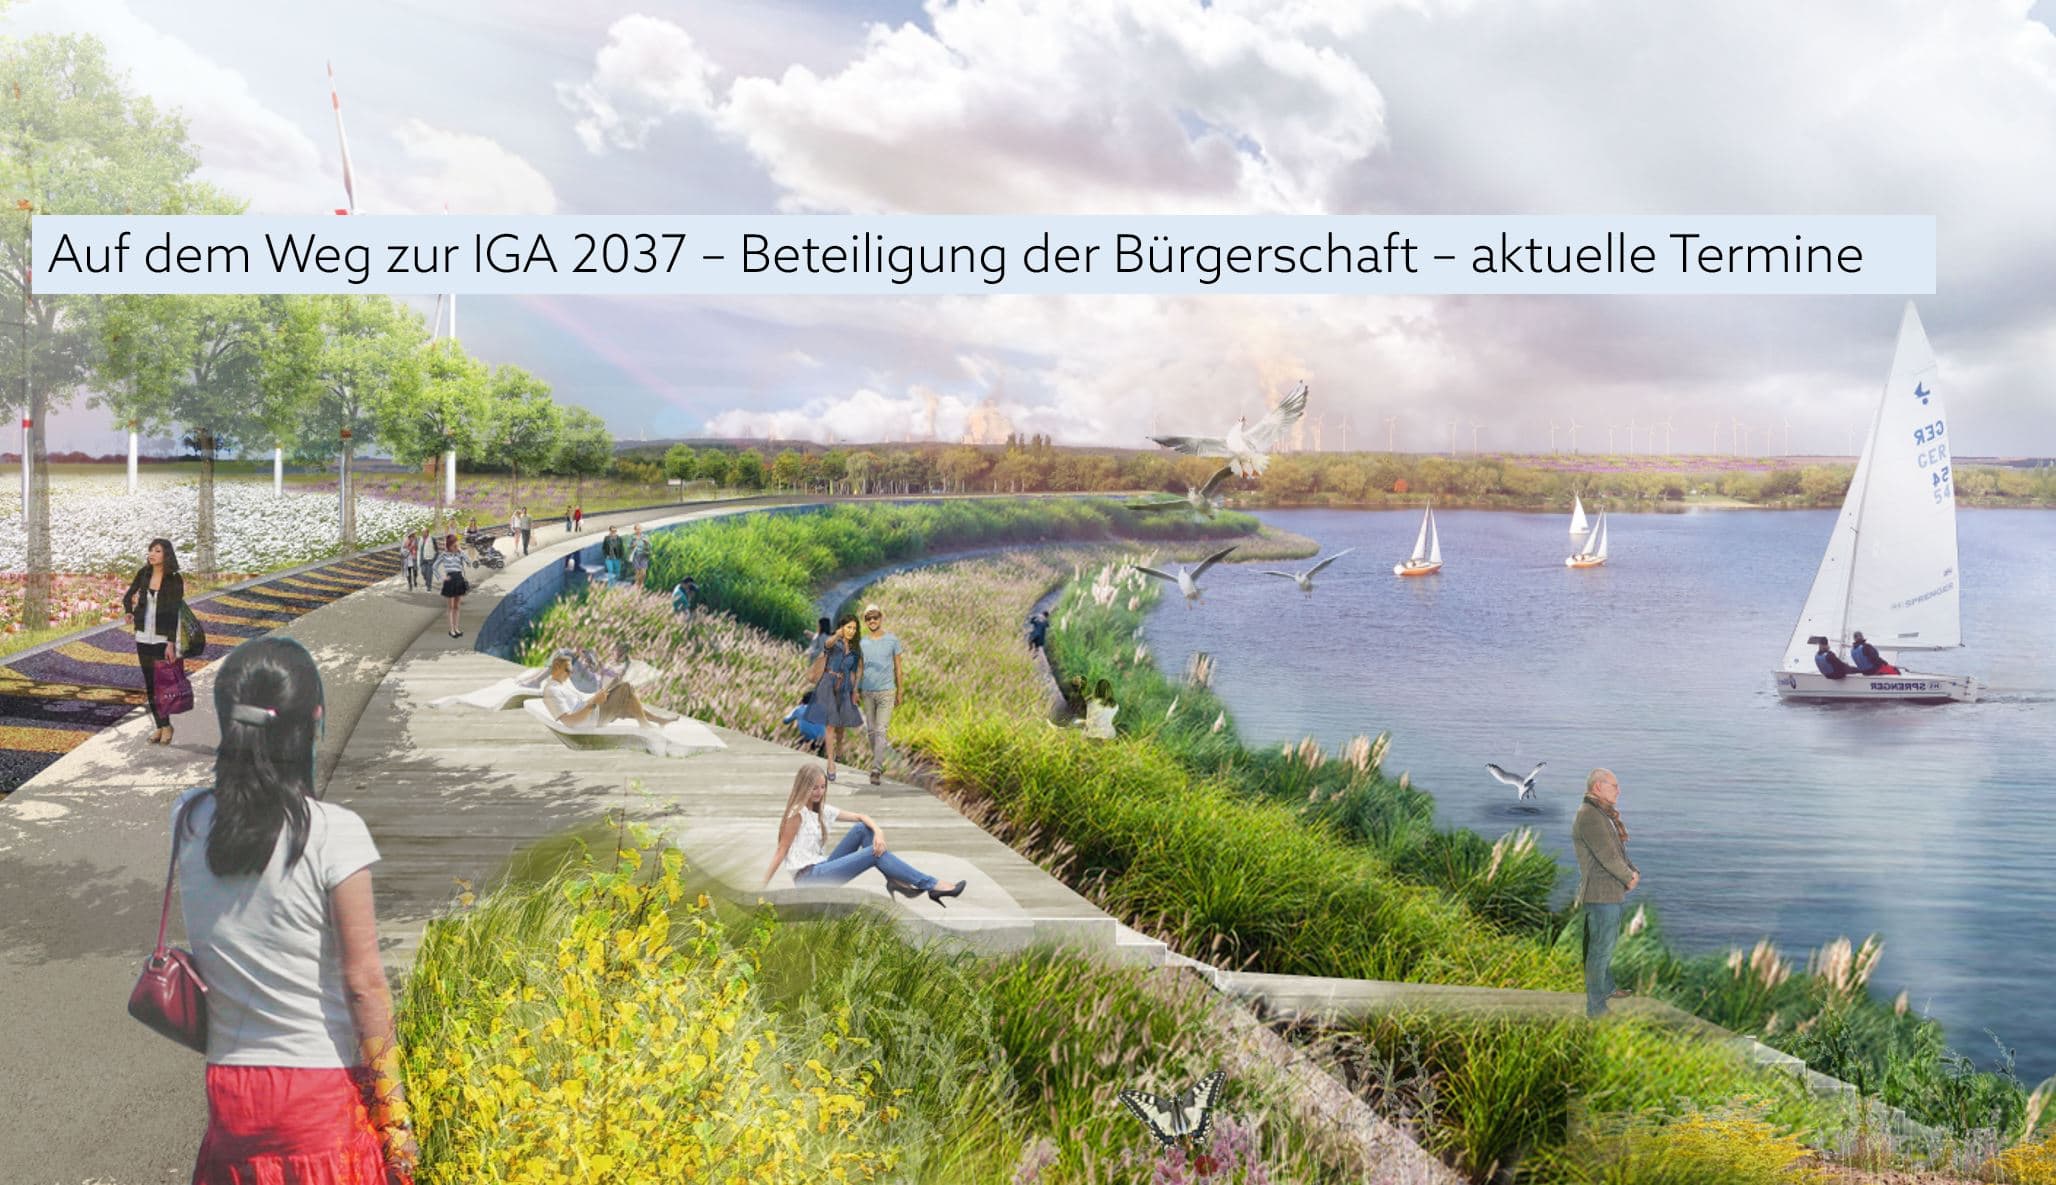 Internationale Gartenausstellung Garzweiler 2037: Beteiligung der Bürgerschaft